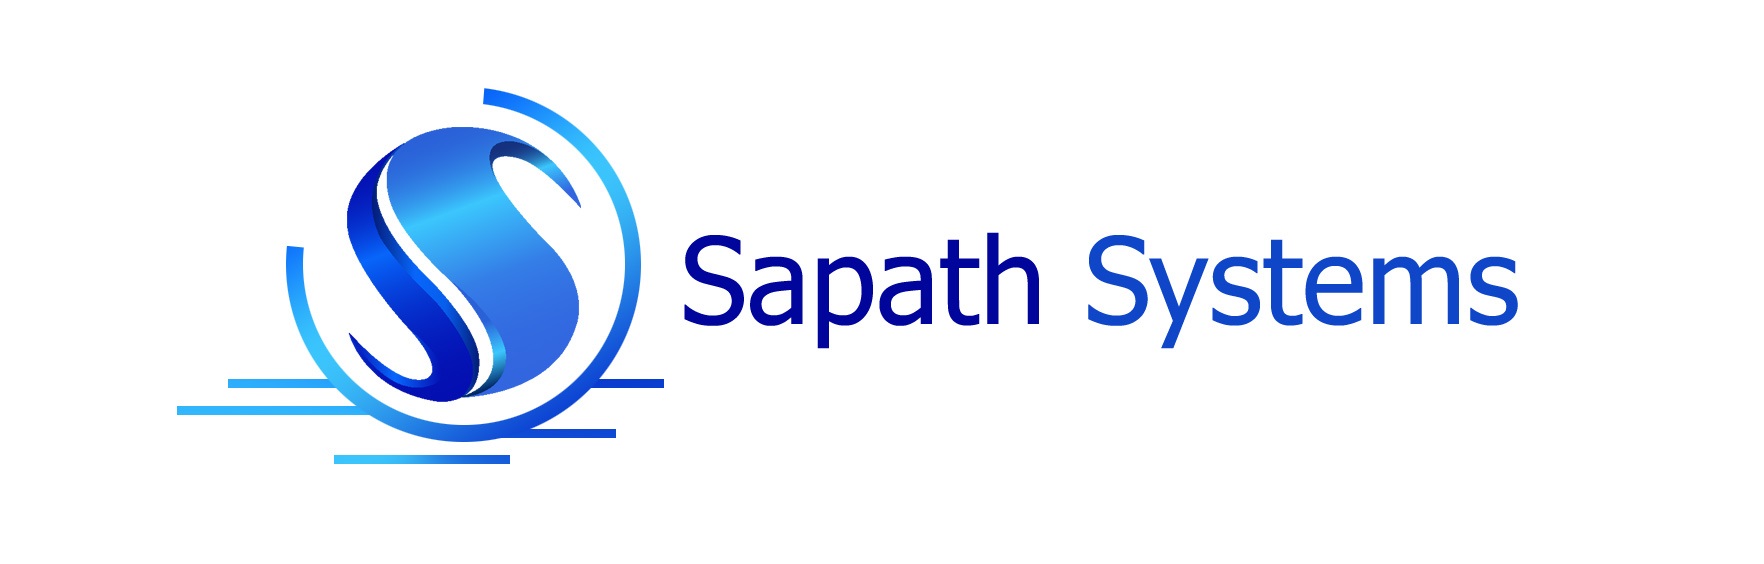 Sapath Support